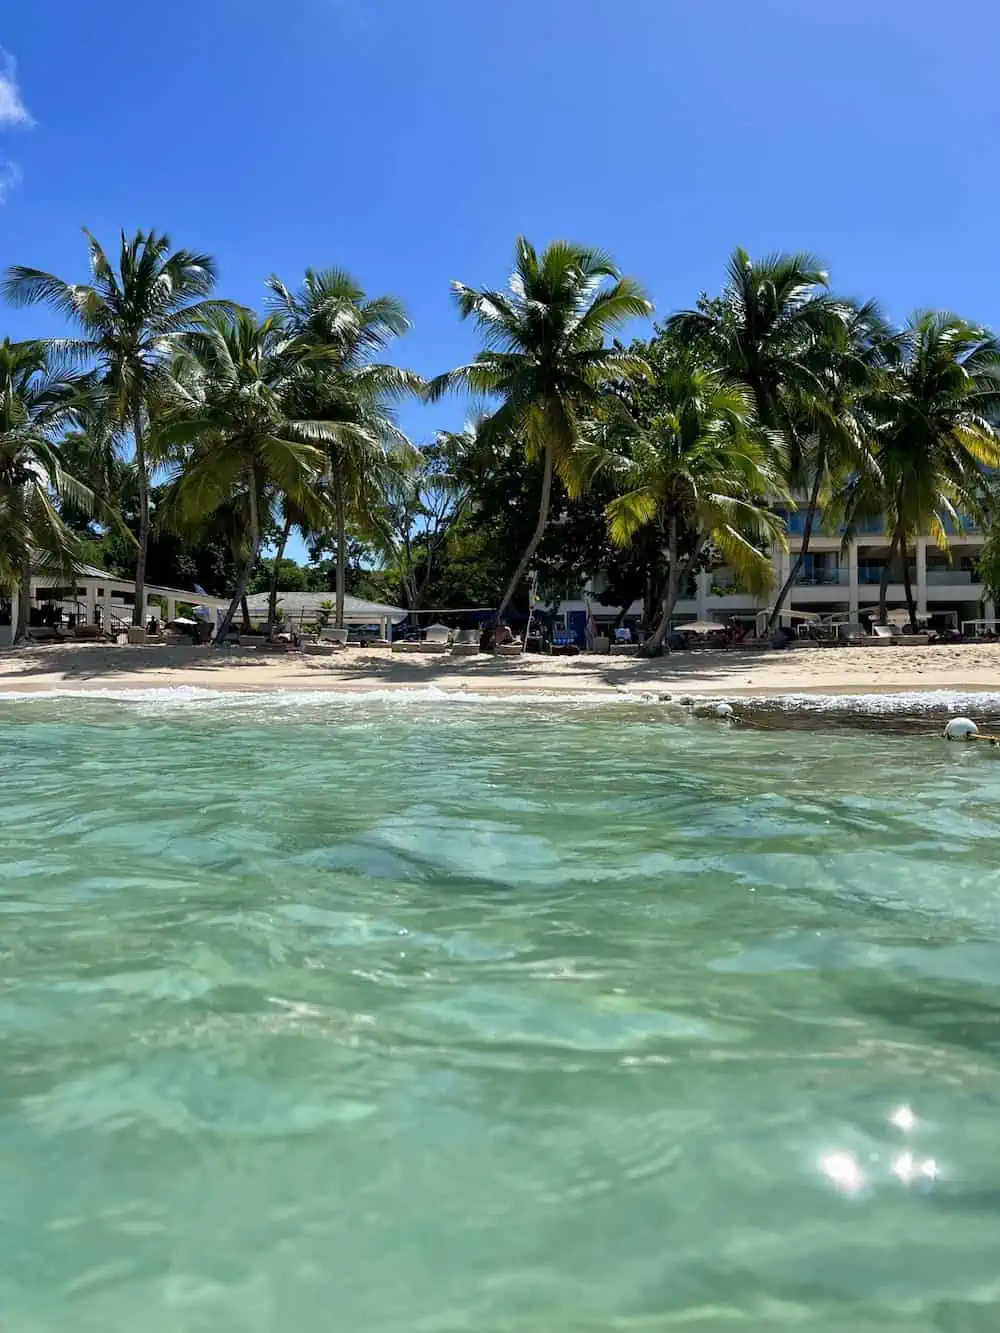 View of the Royalton Grenada  Diamond Club beach zone on Magazine Beach from the water.